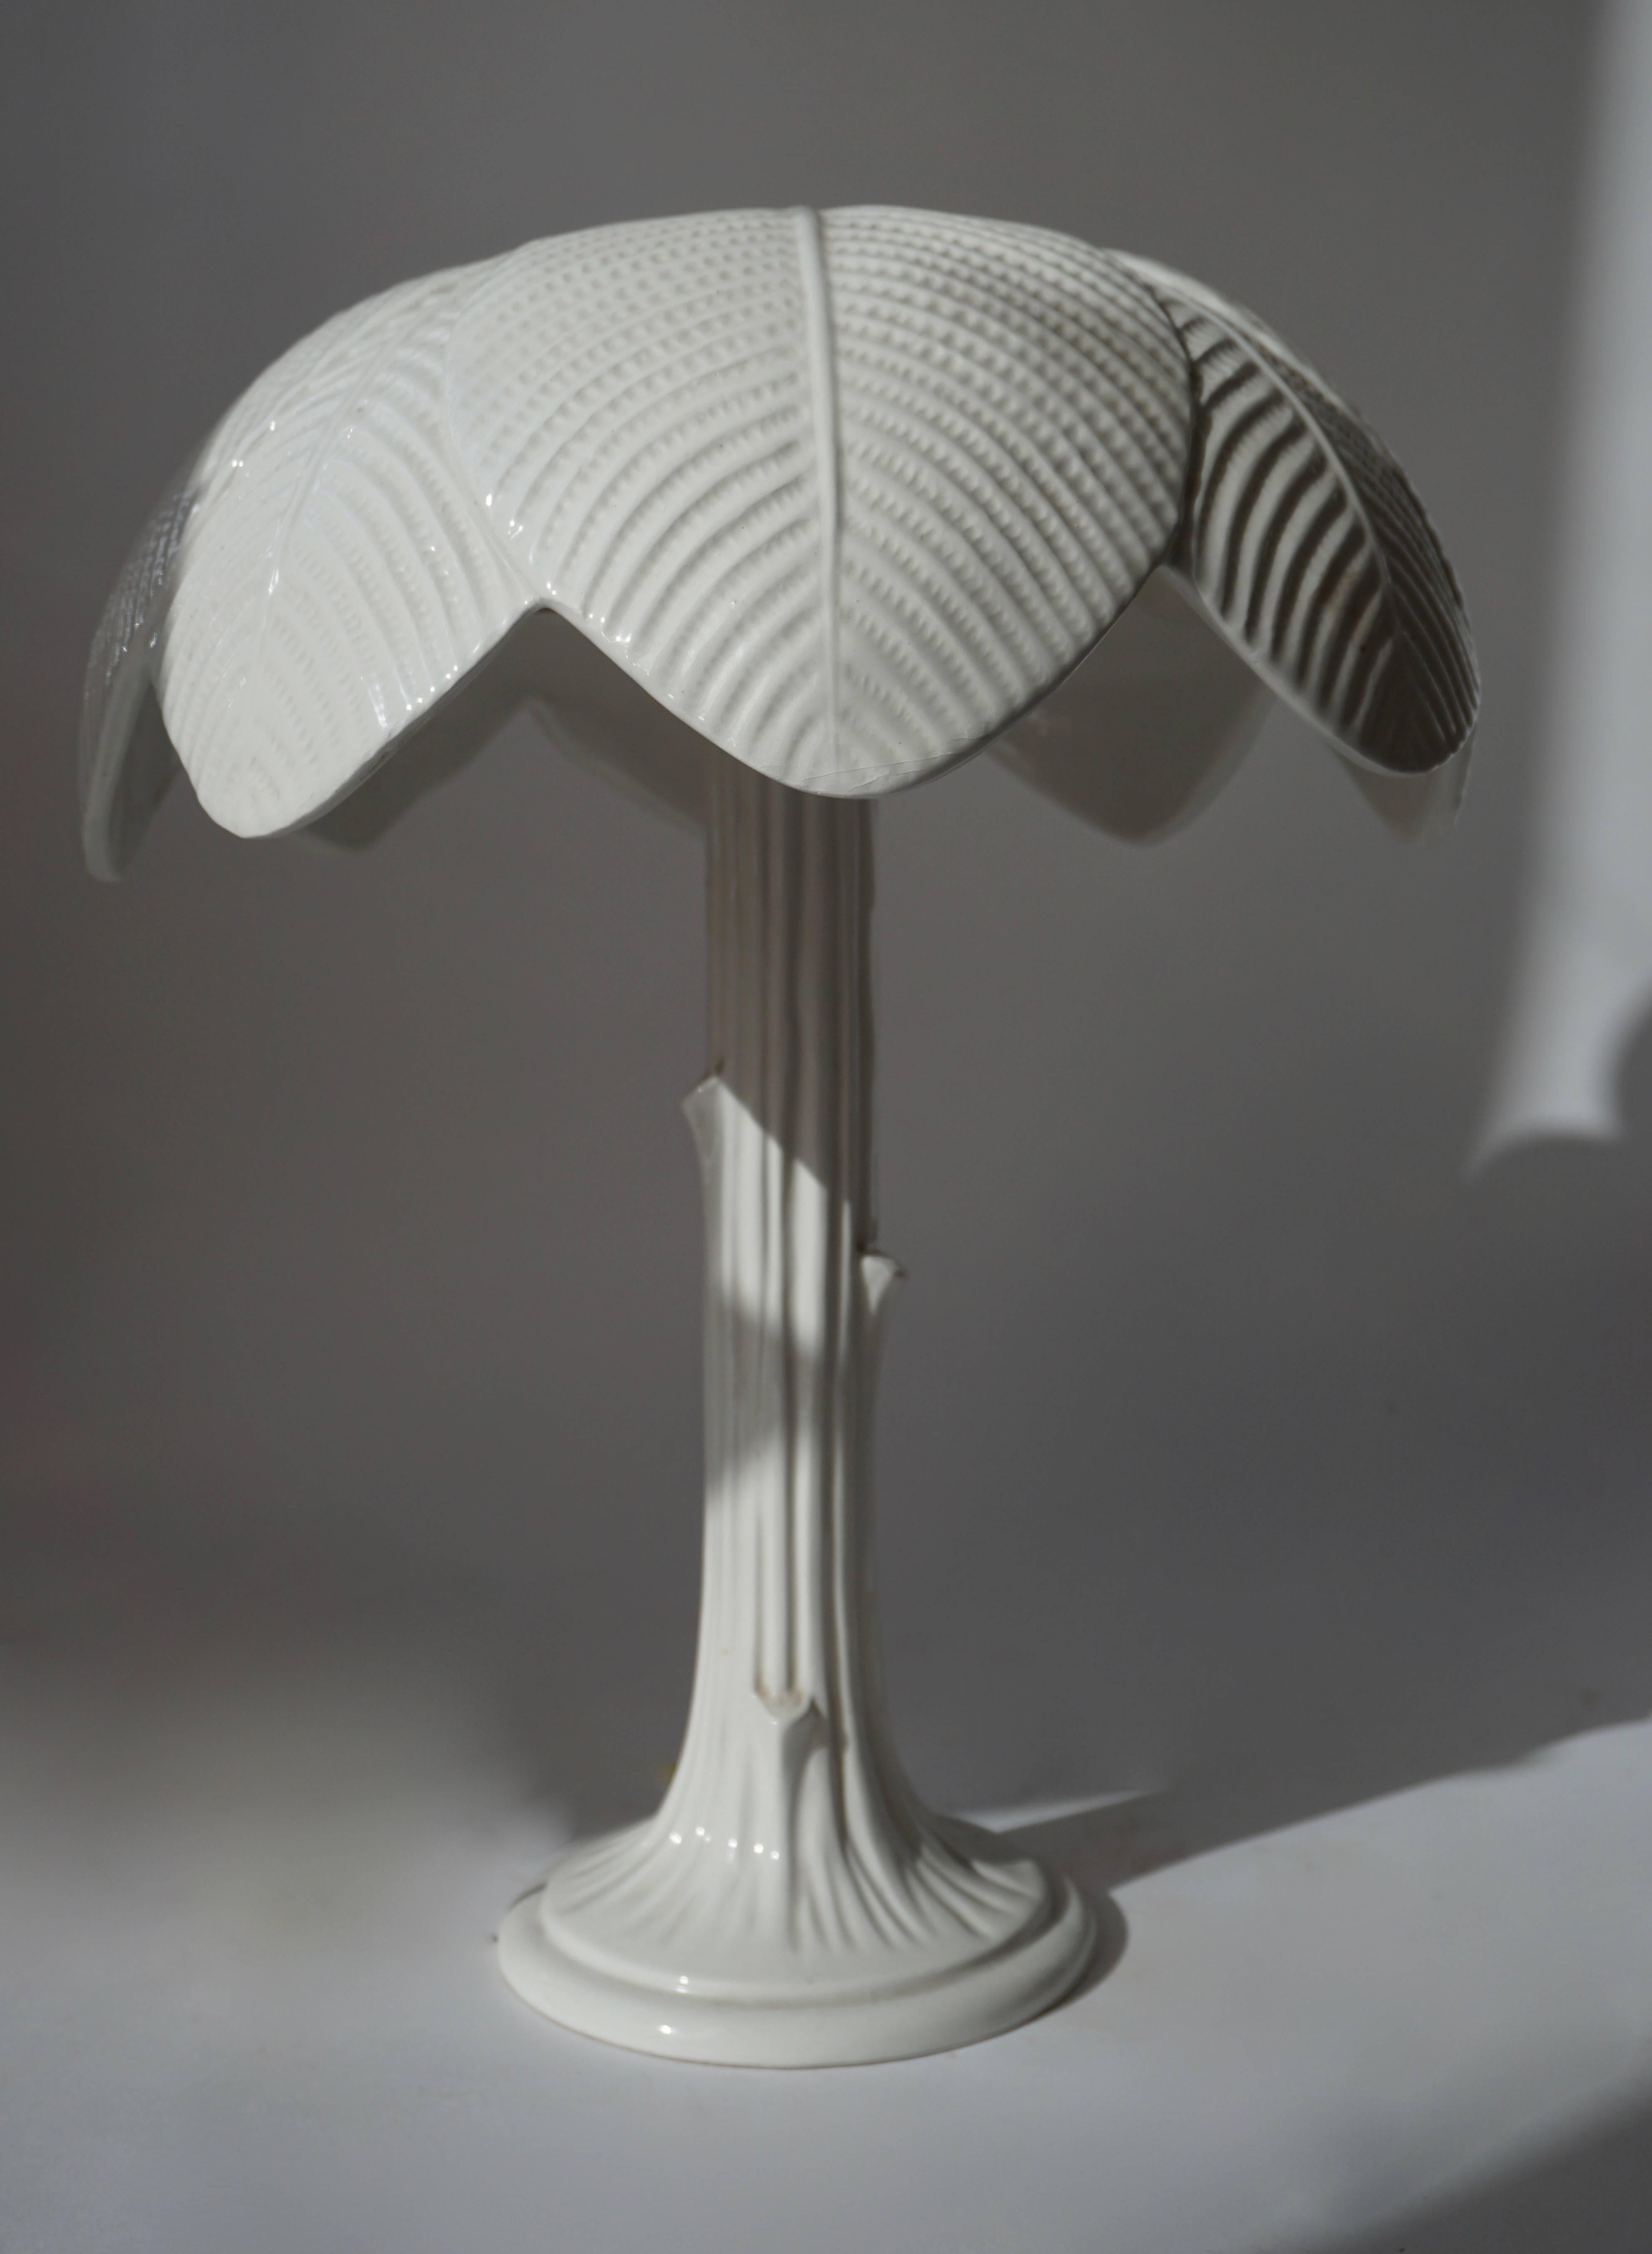 Italian porcelain table lamp.
Measures: Height 42 cm.
Diameter 35 cm.